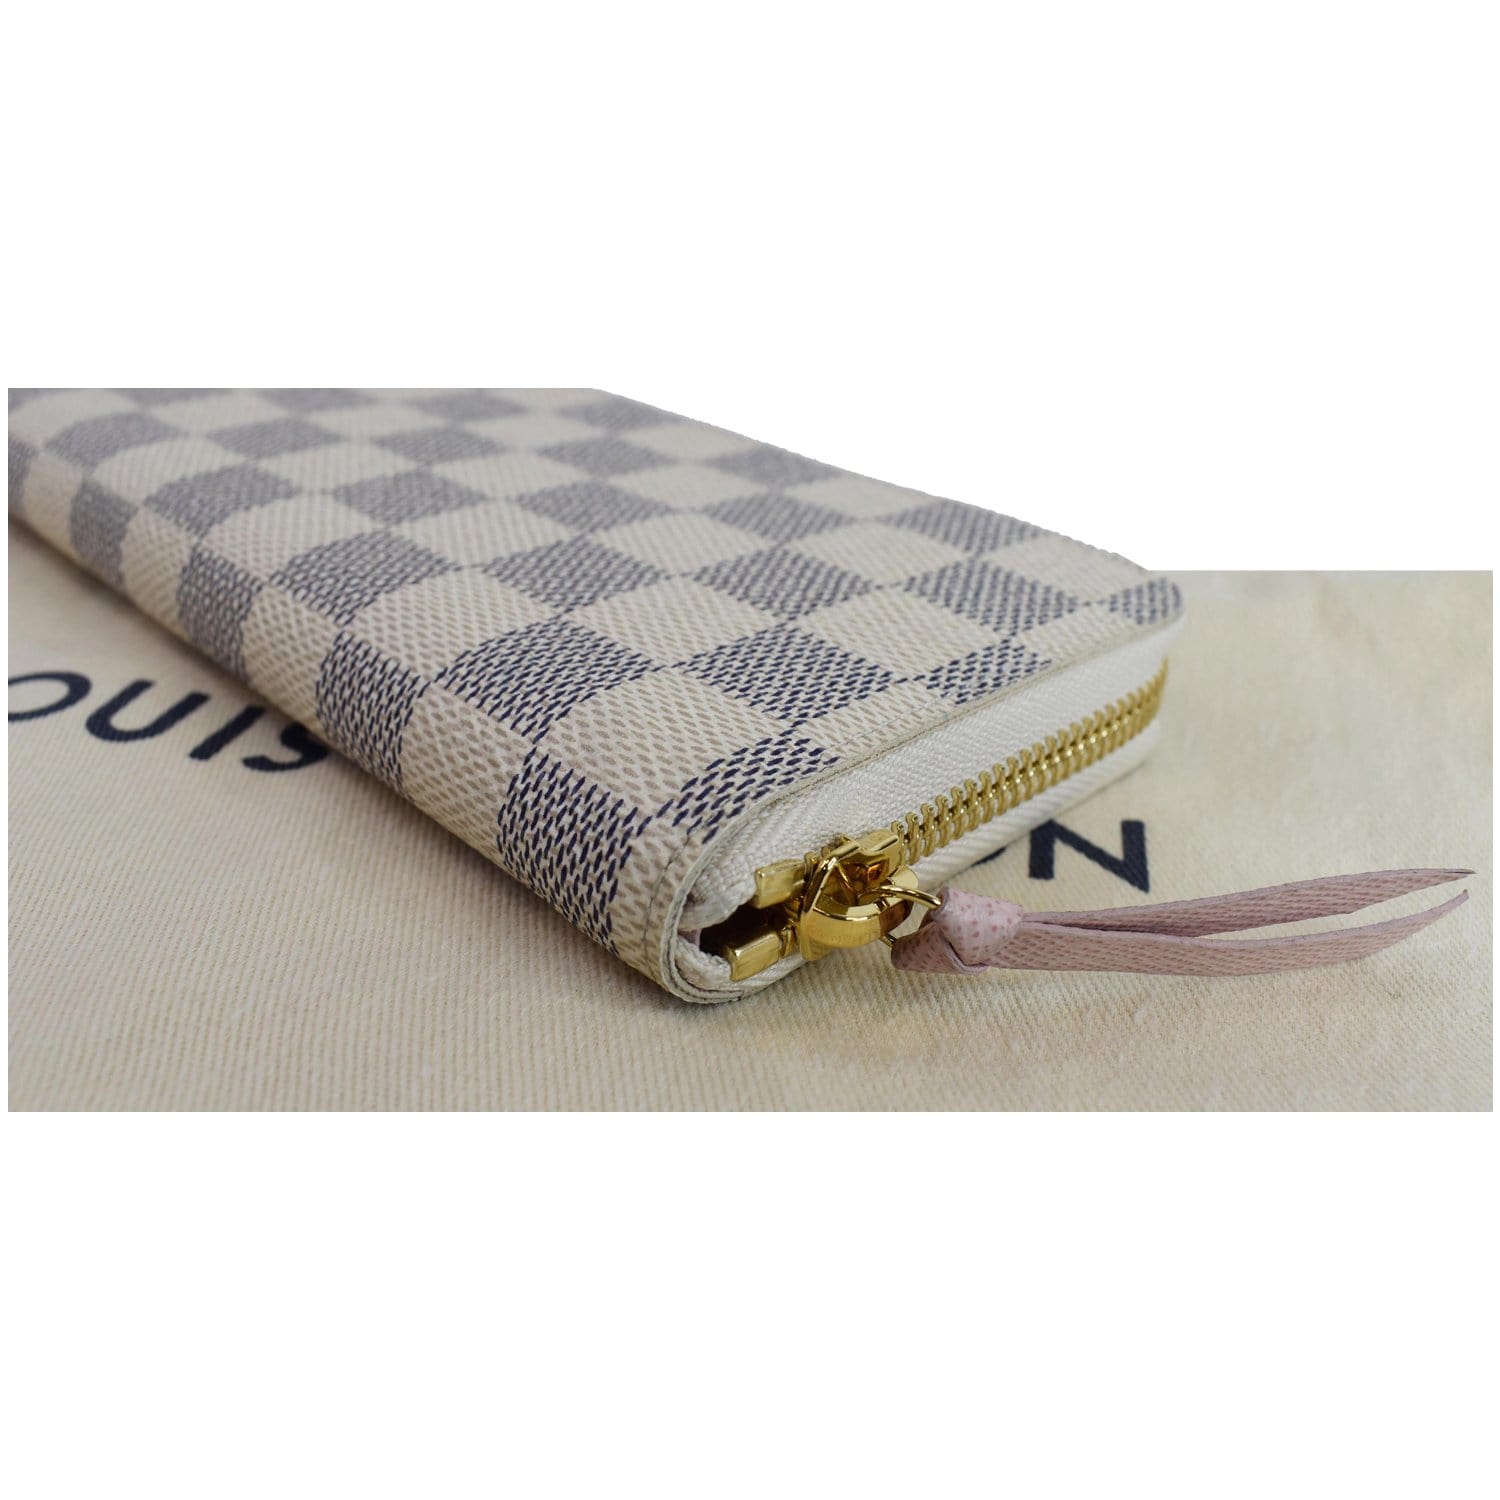 Louis Vuitton Zippy Damier Azur Wallet White for Women